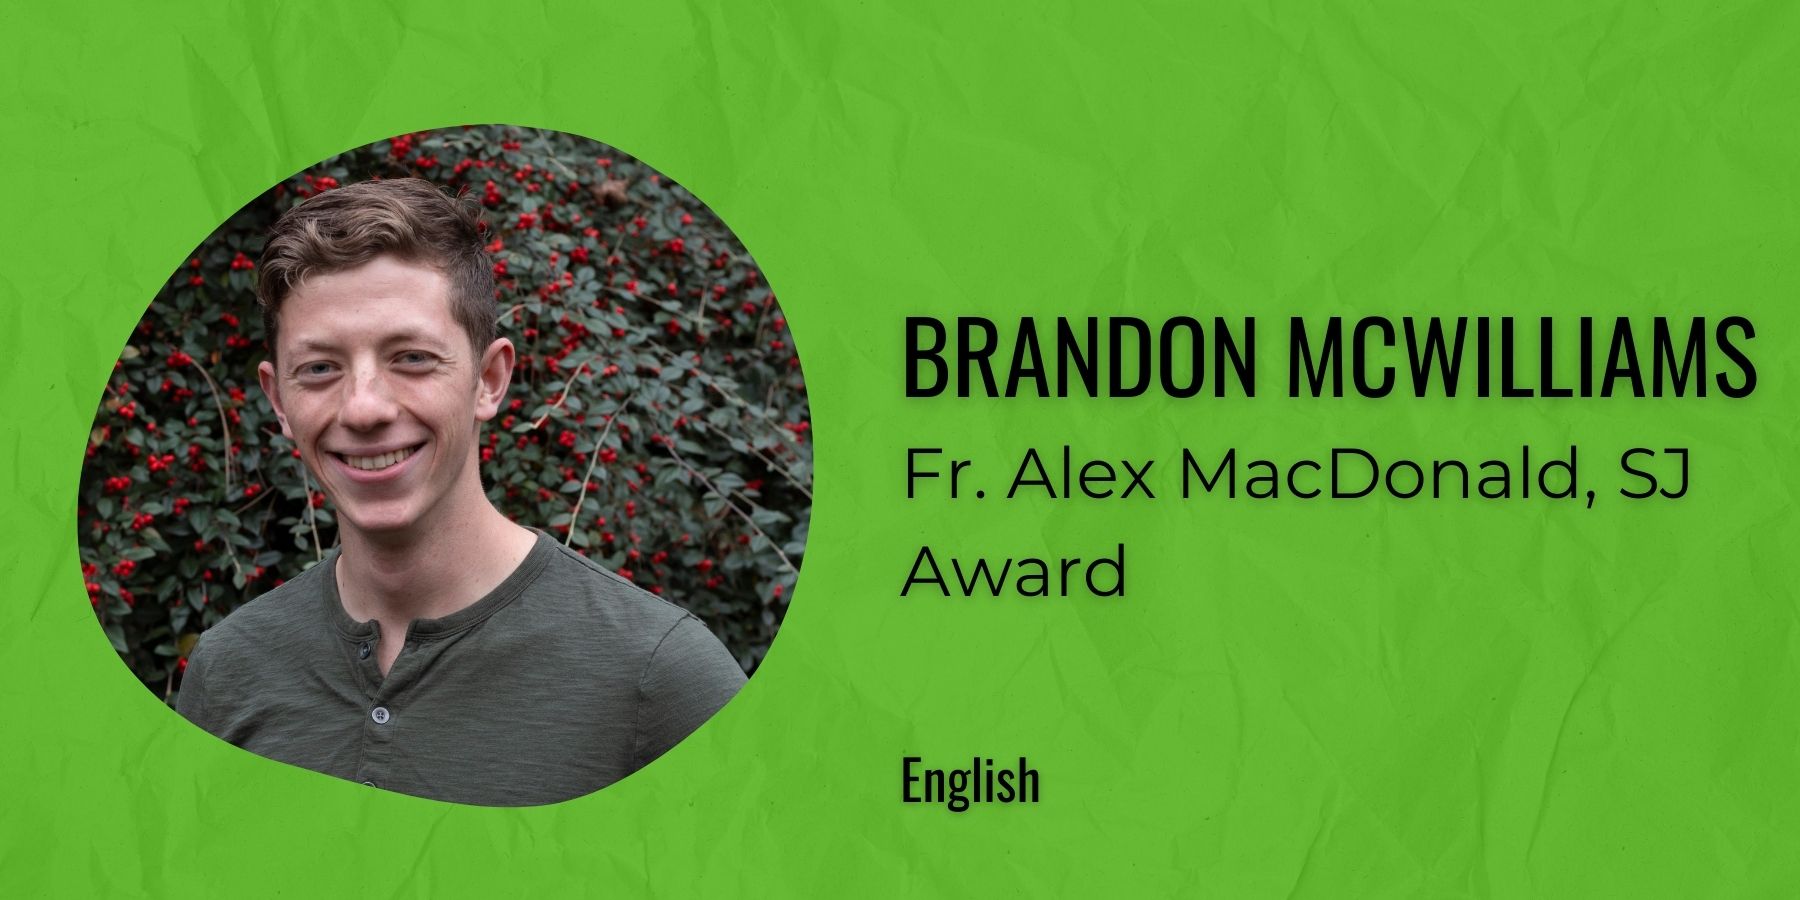 Image of Brandon McWilliams with text: Fr. Alex MacDonald, SJ Award, English
